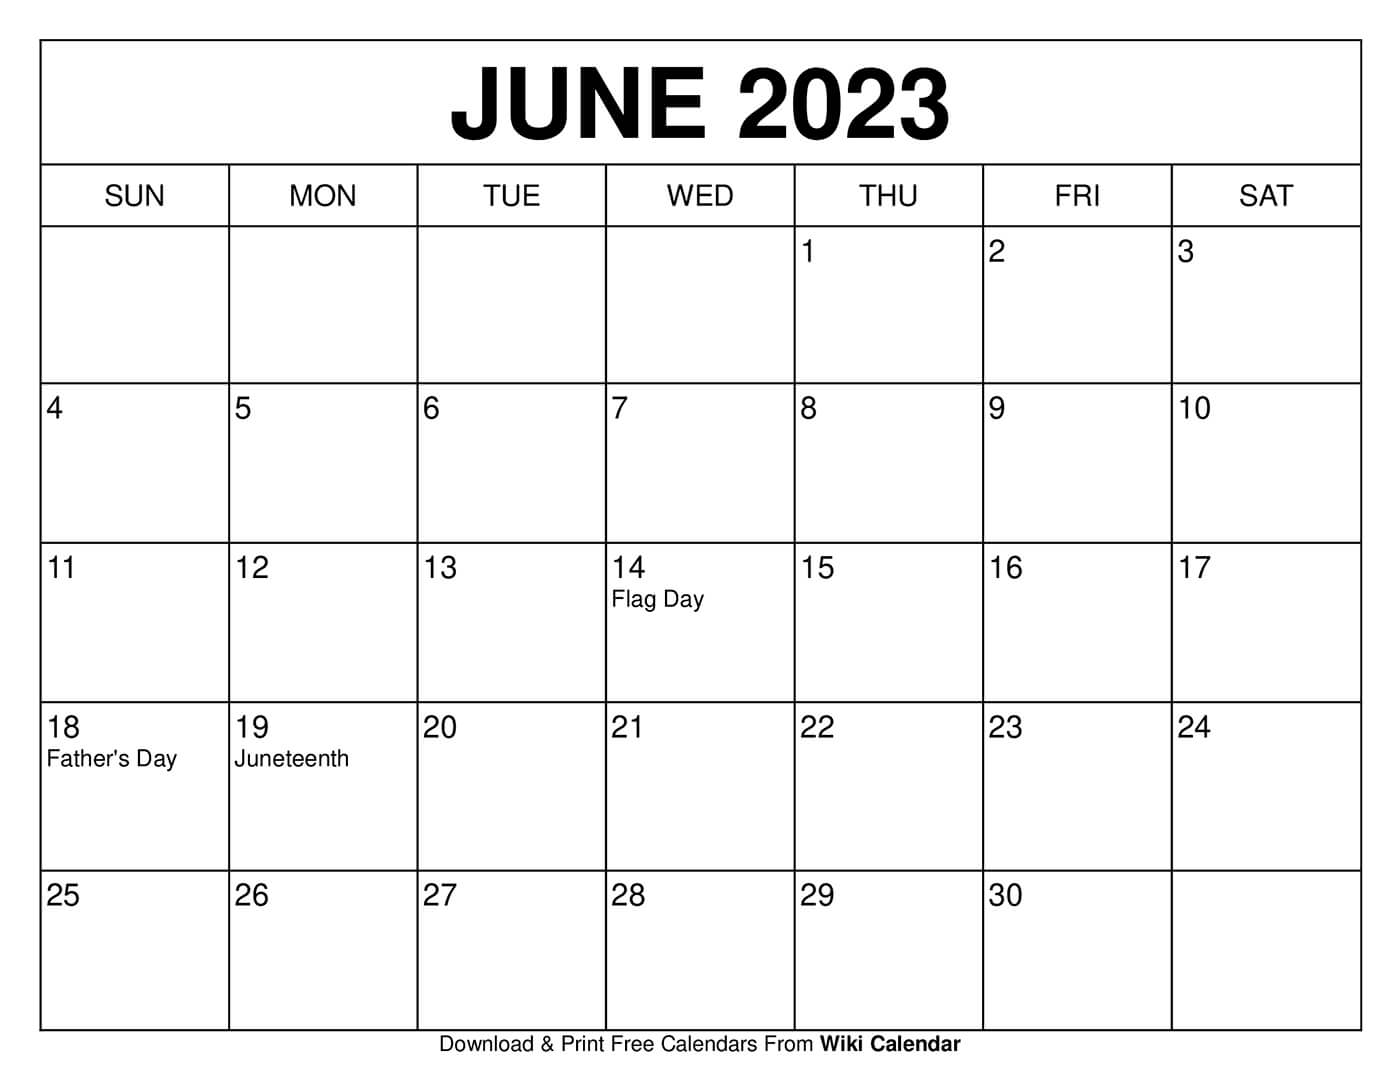 June 2023 Calendar Image Get Latest Map Update